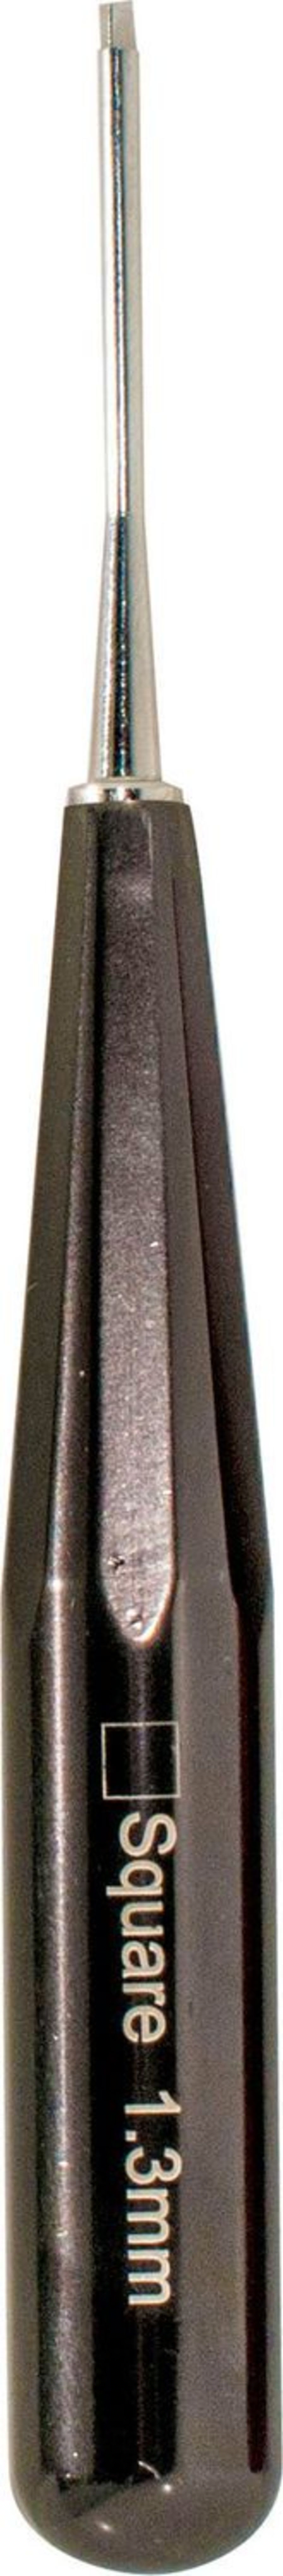 Dental screwdriver ID 526 A. Titan Instruments